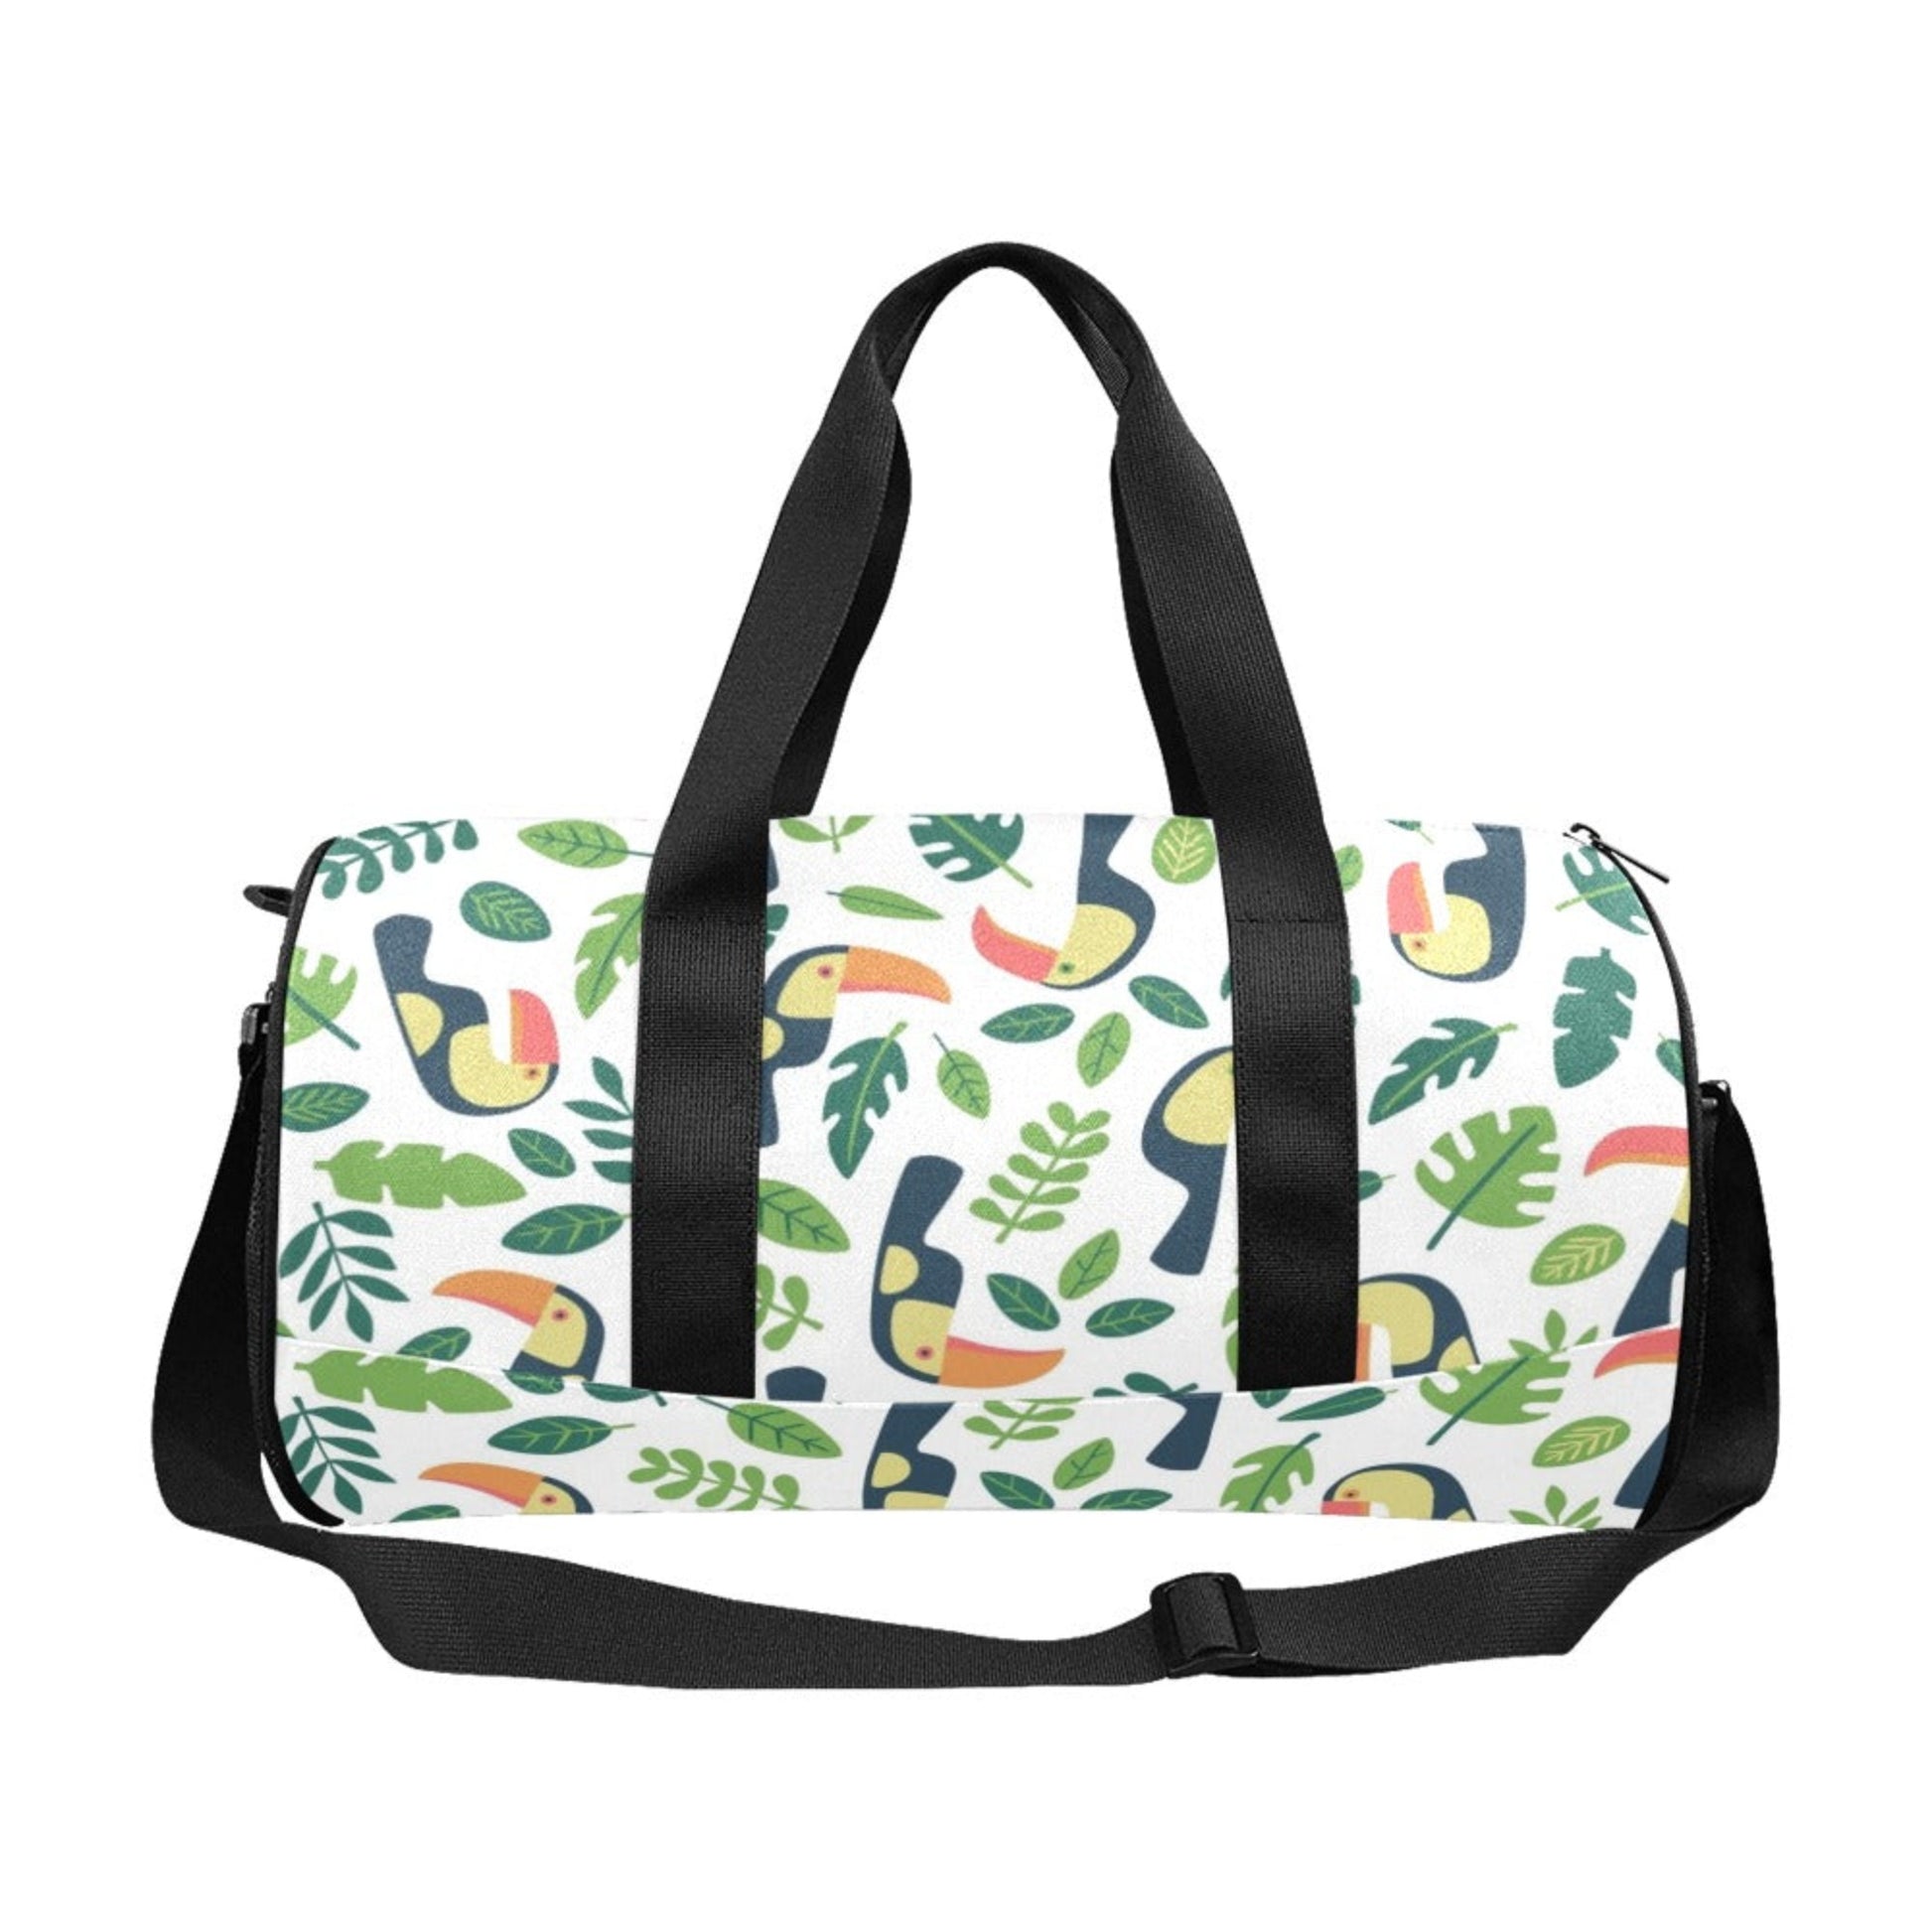 Toucans - Round Duffle Bag Round Duffle Bag